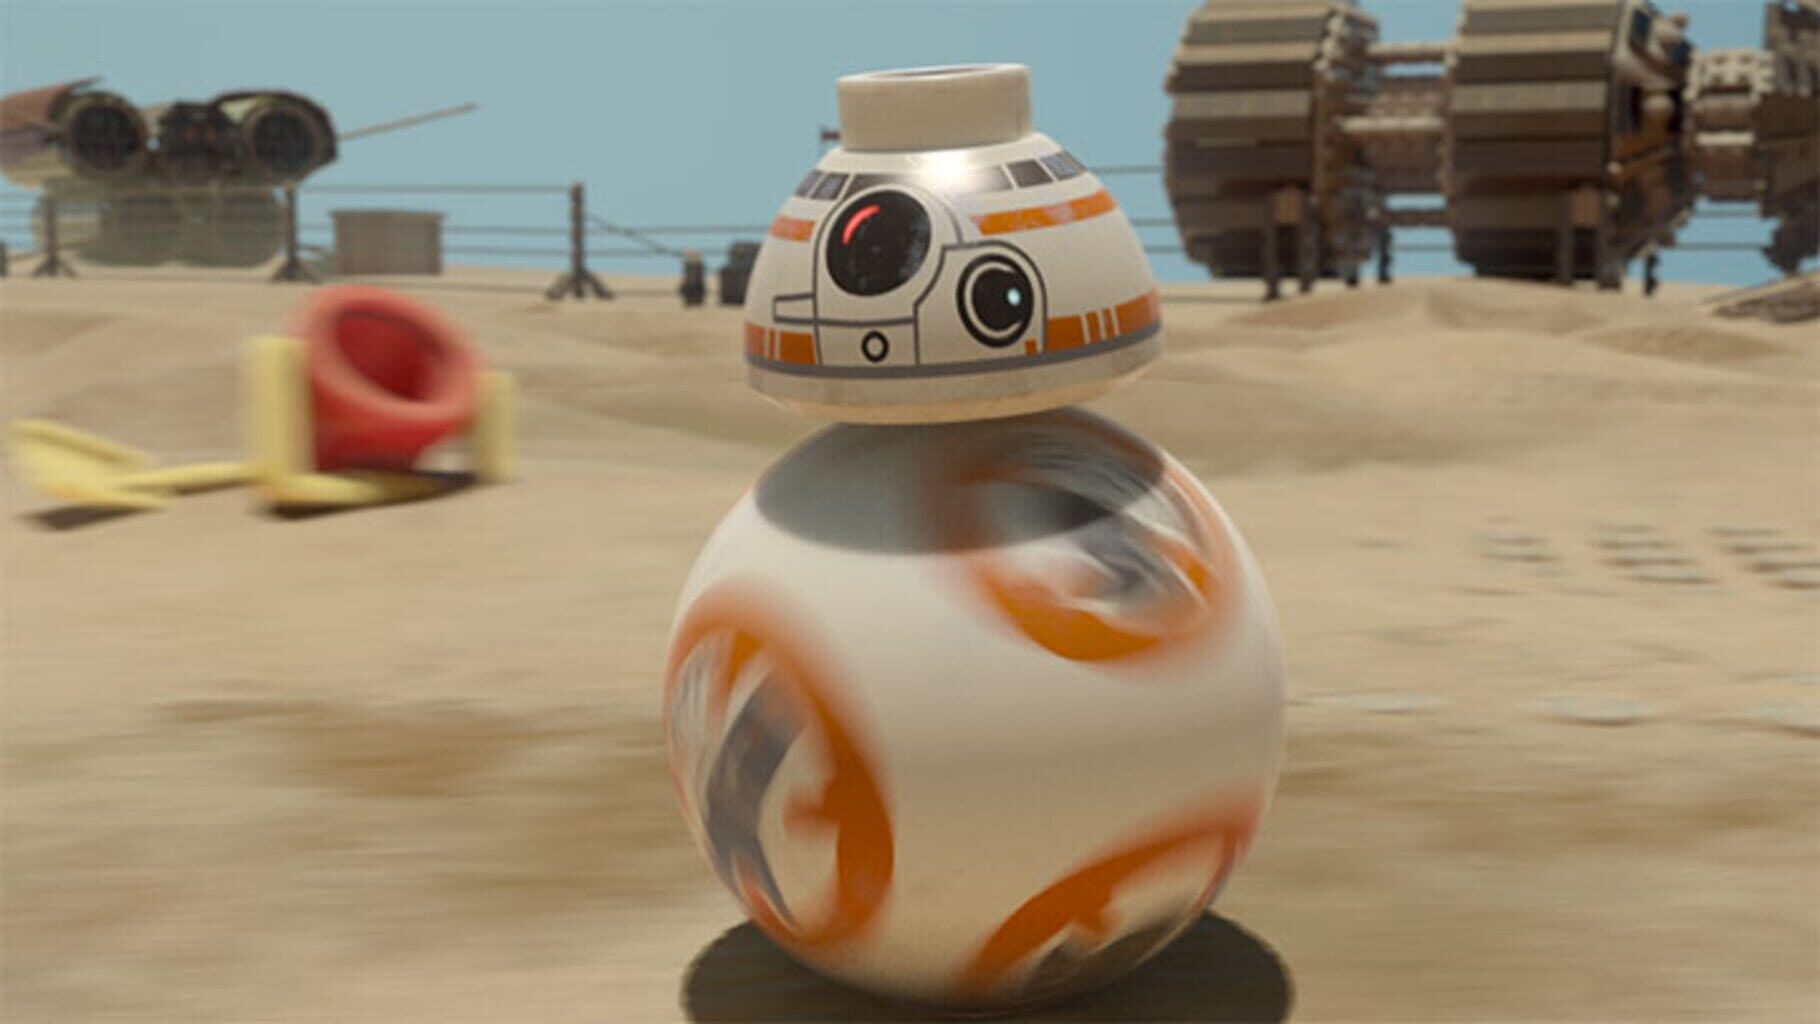 LEGO Star Wars: The Force Awakens screenshots